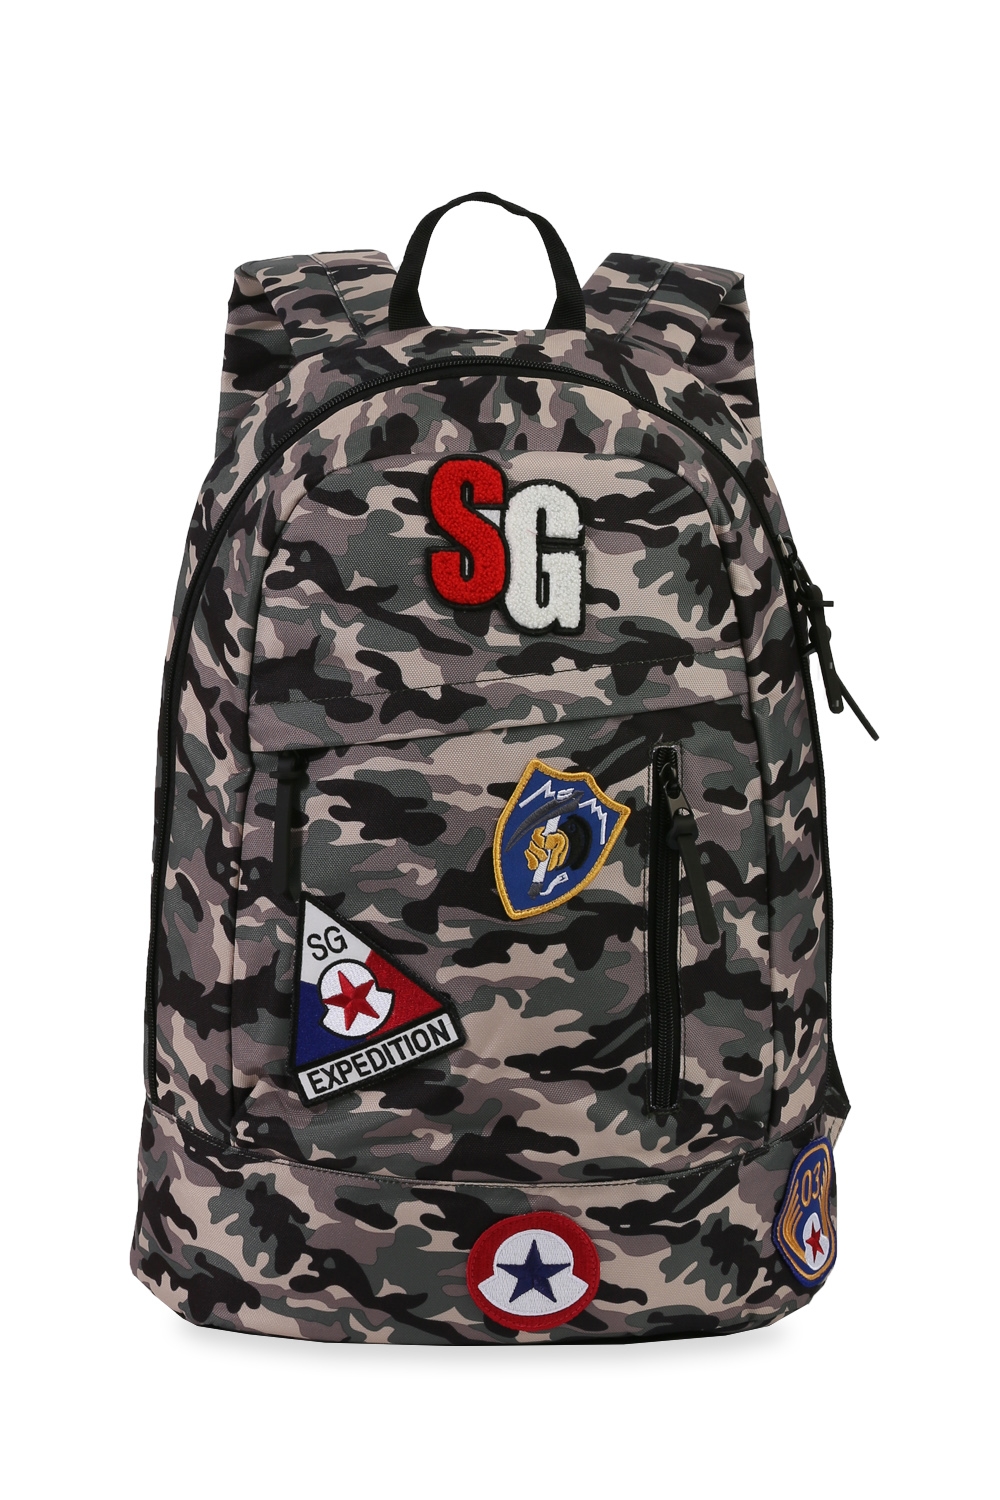 SwissGear High-duty Men's Versatile Macbook Laptop Backpack Hiking bag Schoolbag 